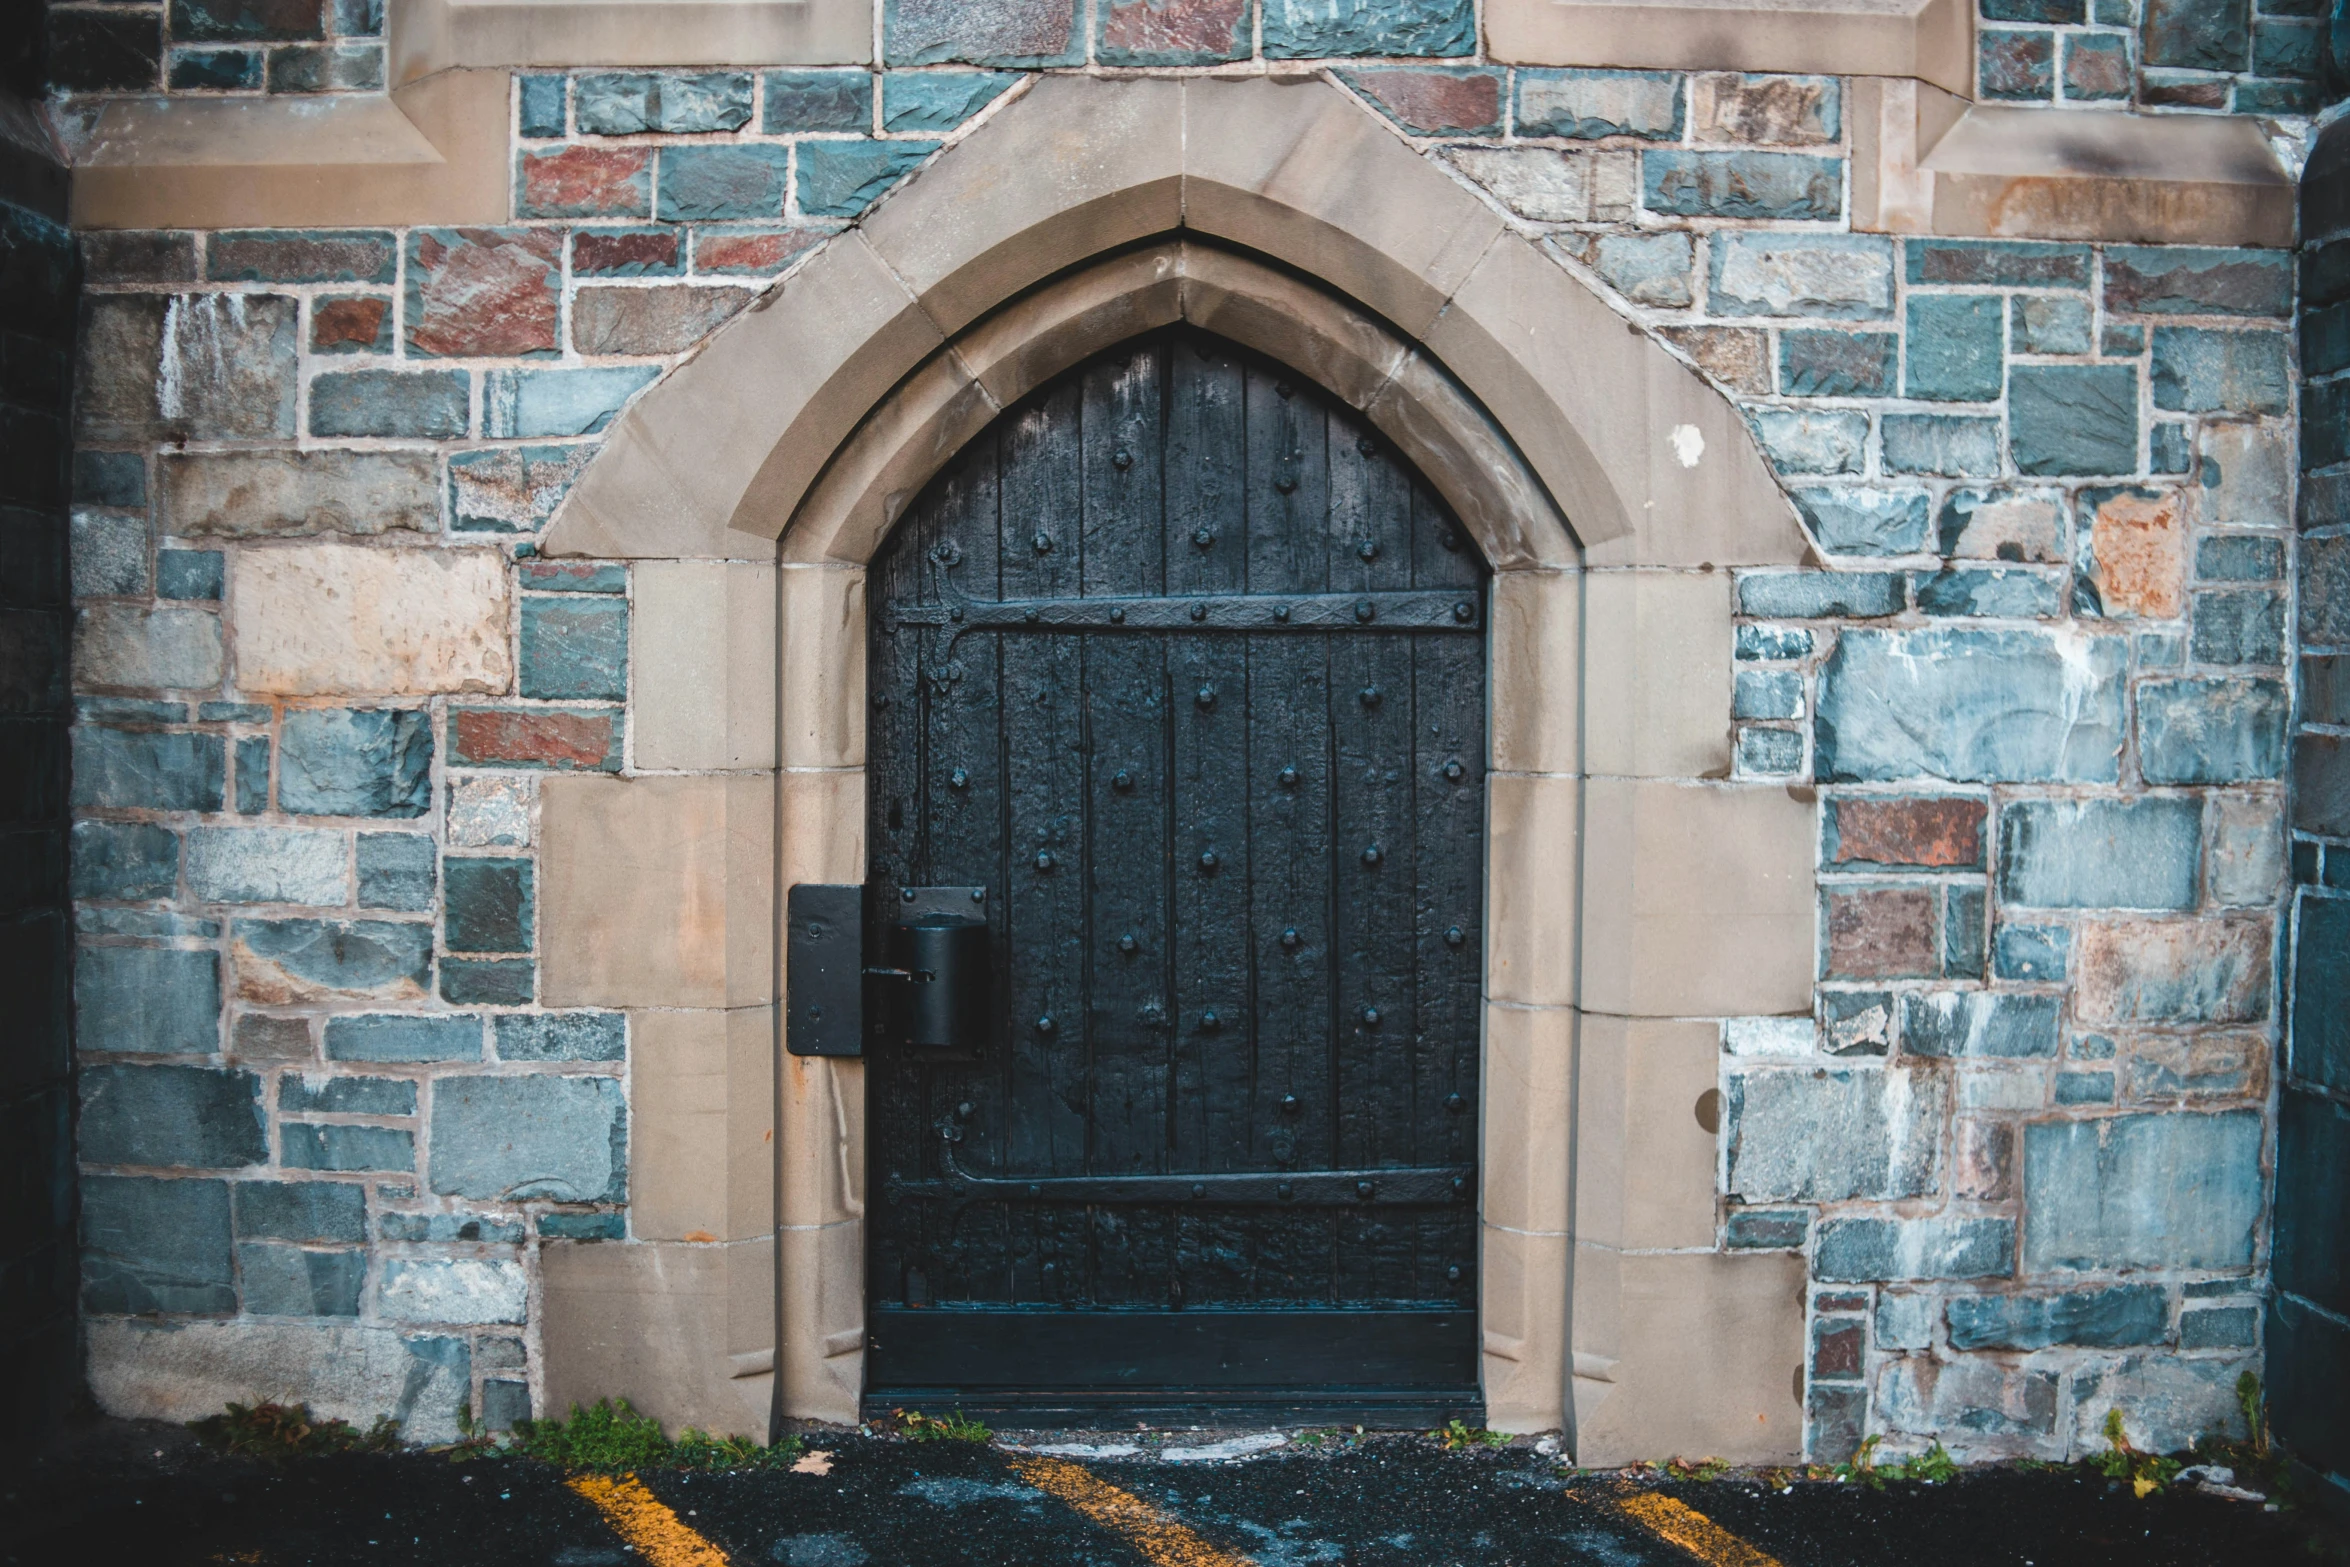 the door is open to the bricked church